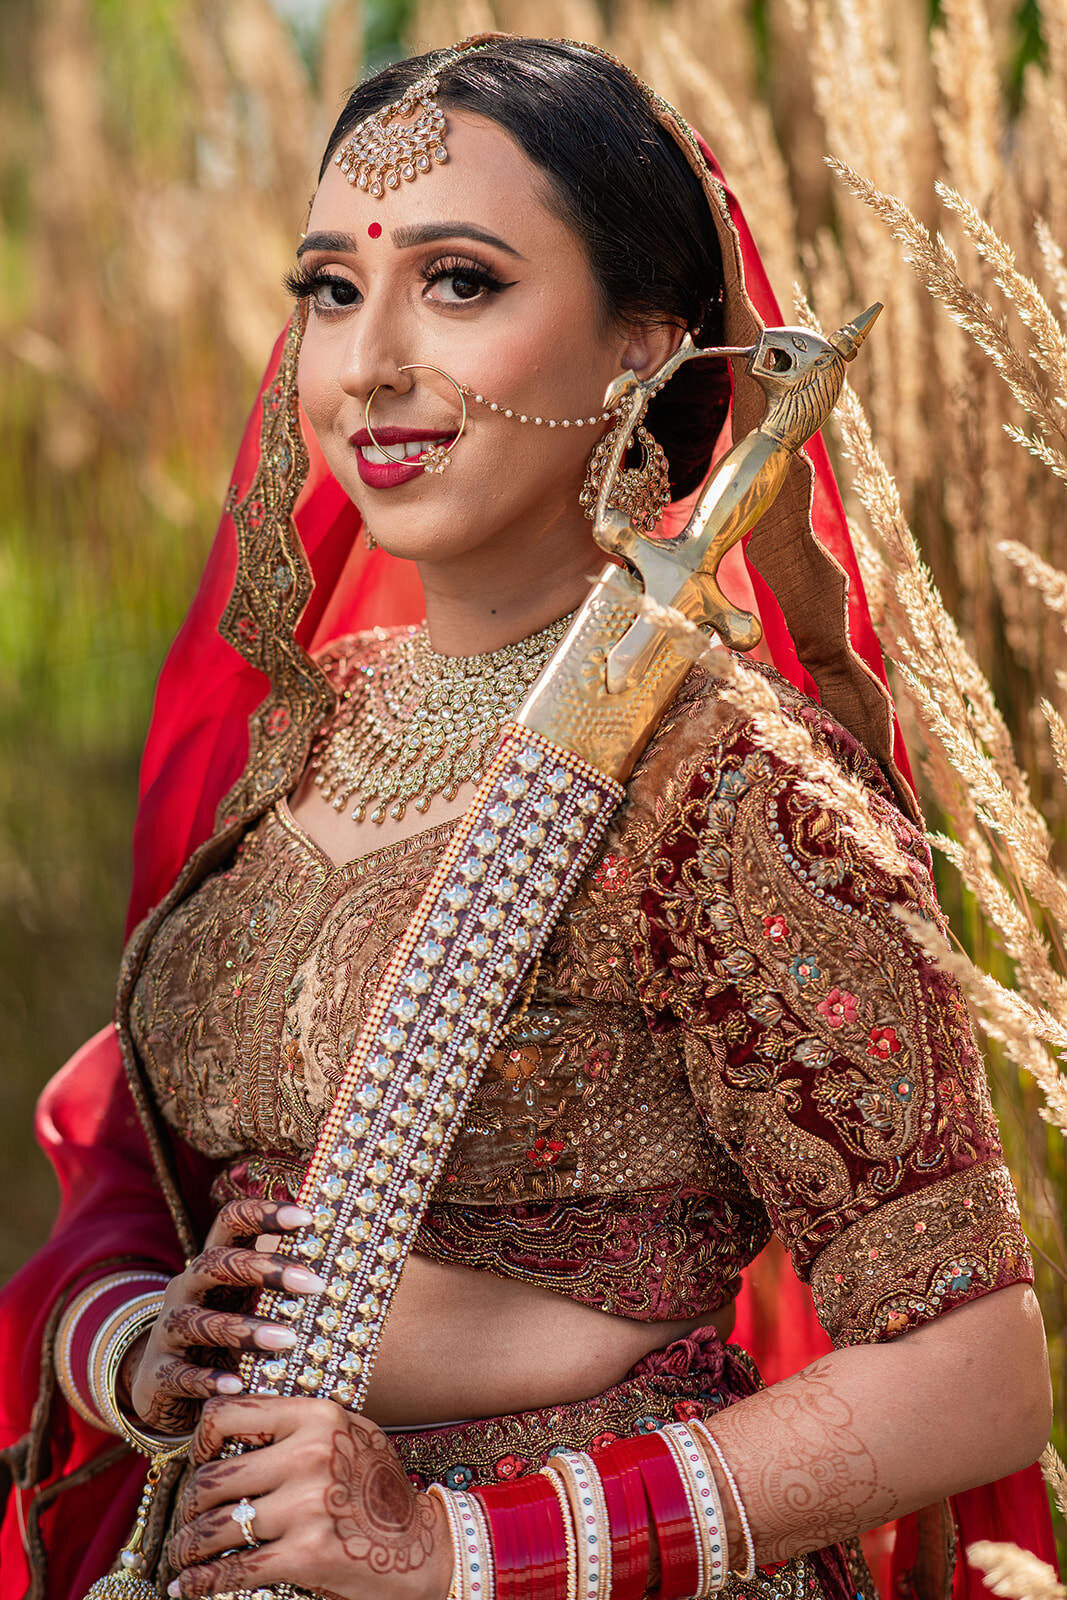 best toronto indian wedding photographer - Indian wedding day portrait